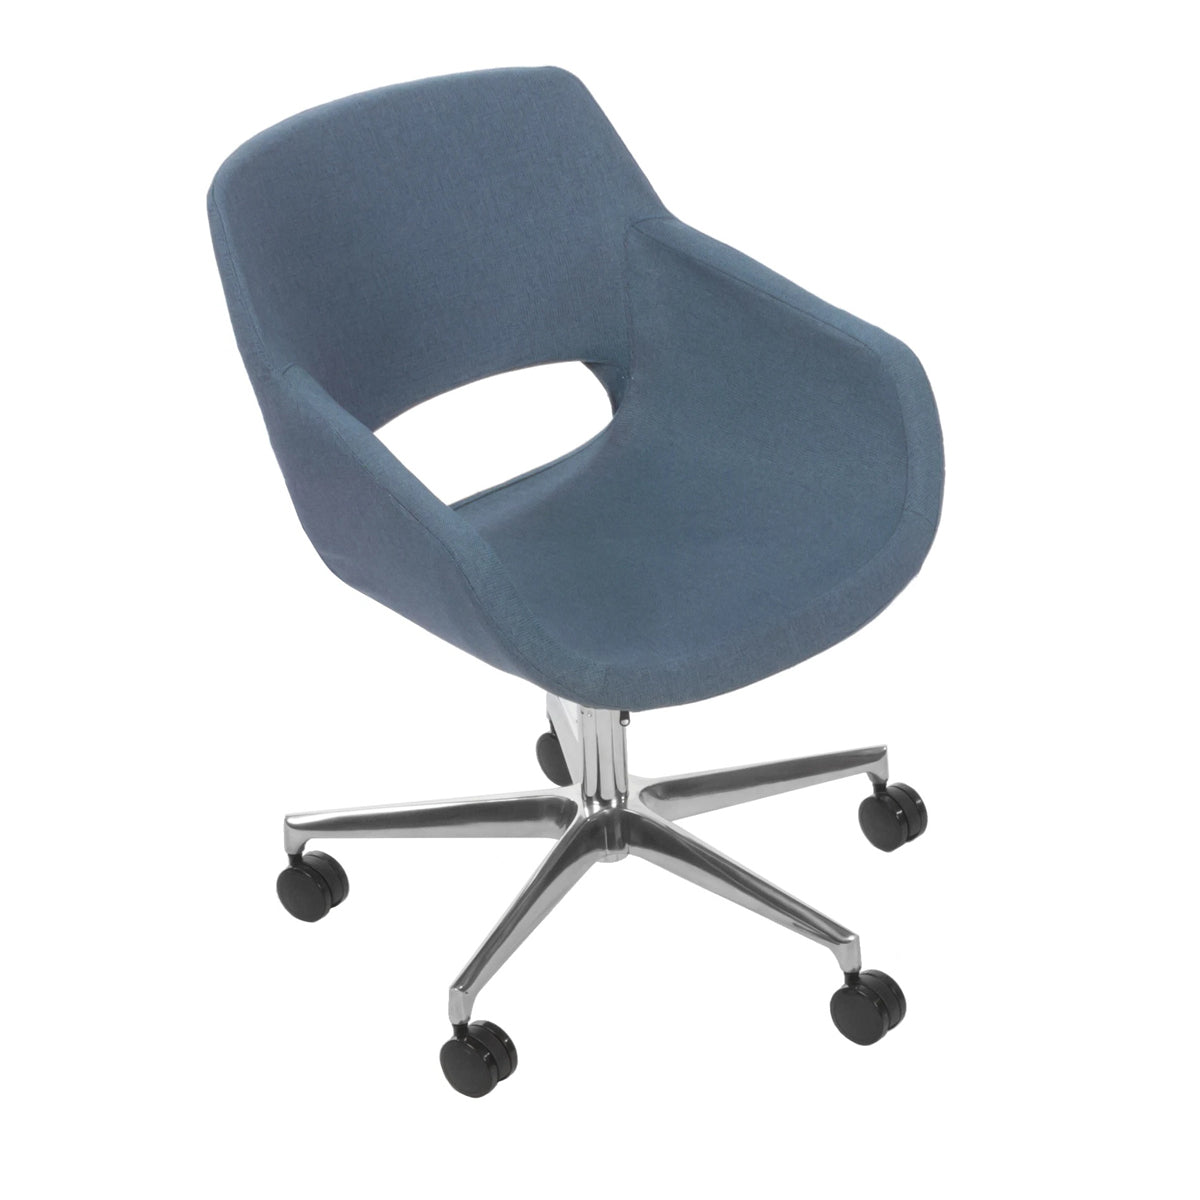 Sillón ejecutivo Flok FL02 respaldo y asiento tapizado en poliuretano base aluminio rodajas